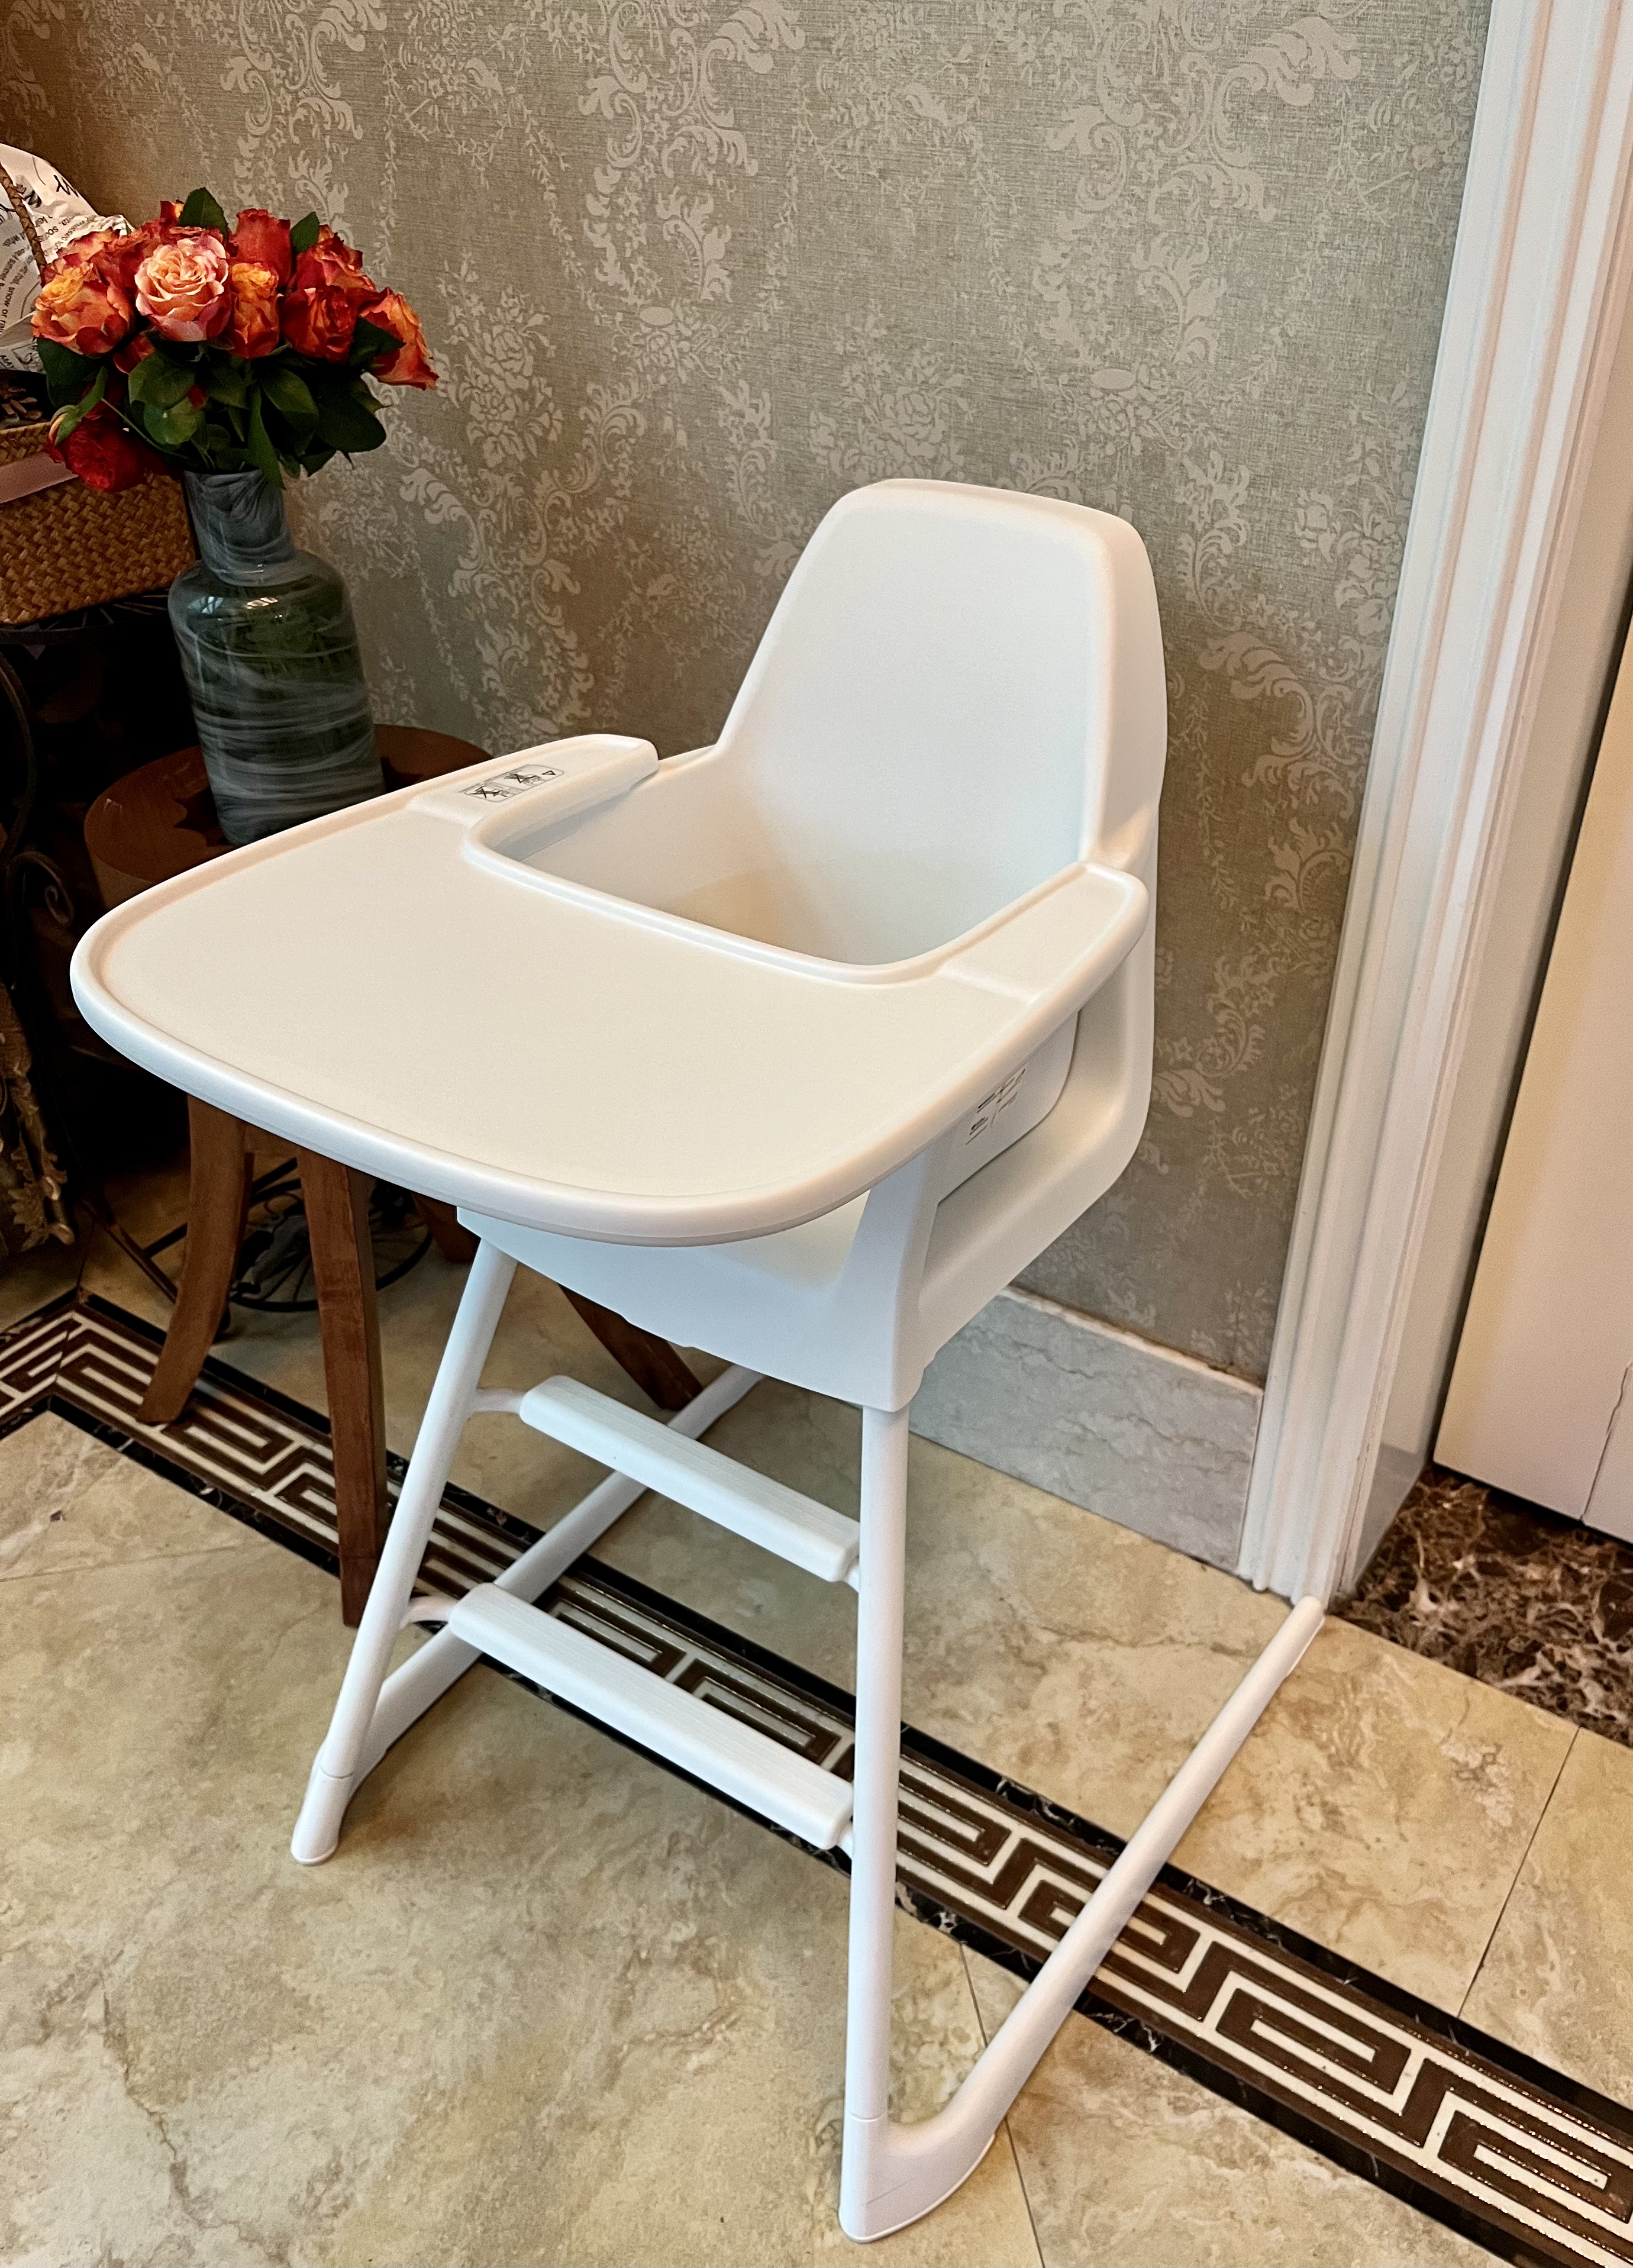 LANGUR 兰格宝宝椅带托盘白色- IKEA